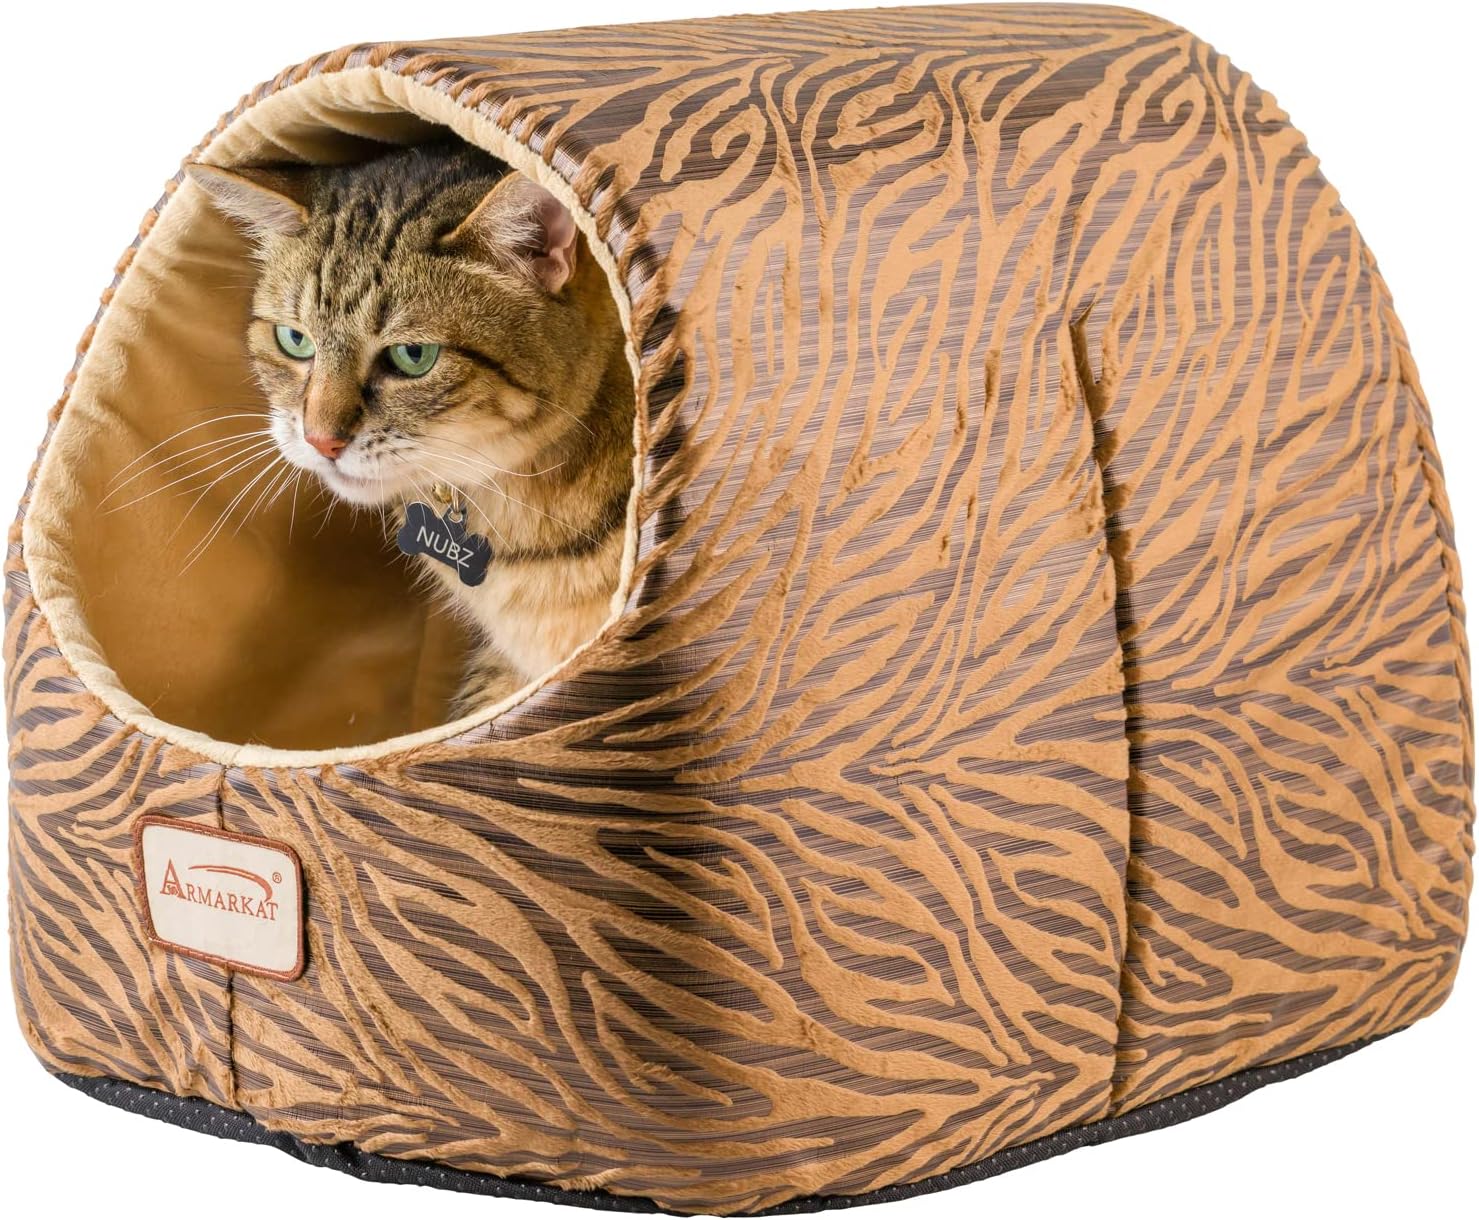 Armarkat Cat Bed, Bronzing and Beige